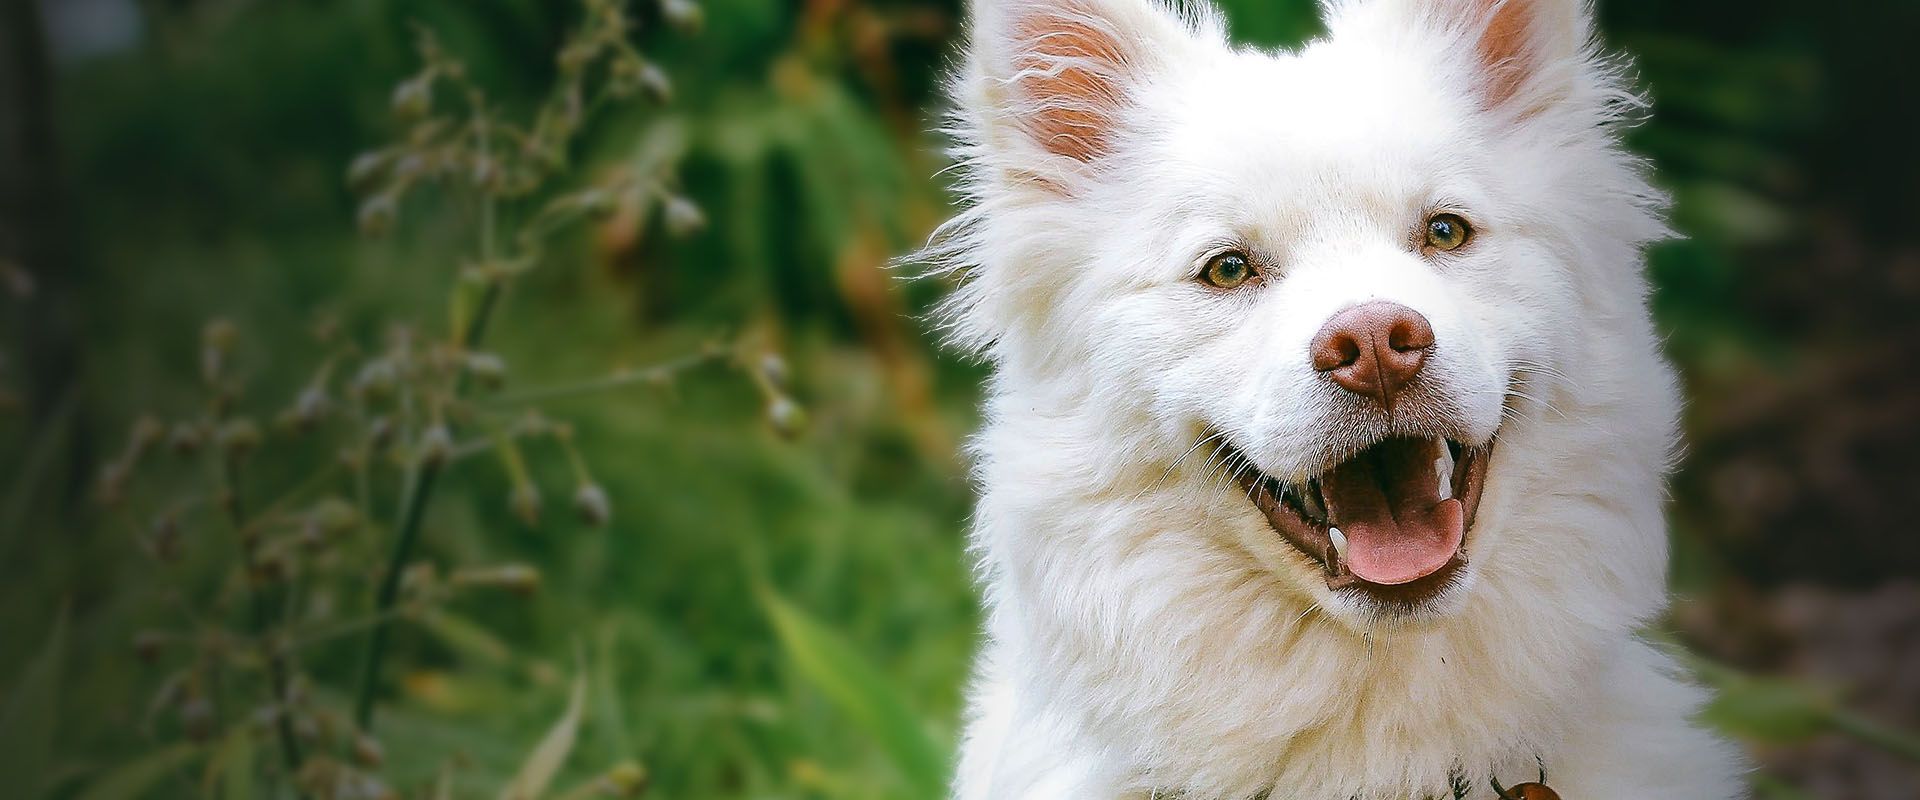 smiling old golden retriever dog